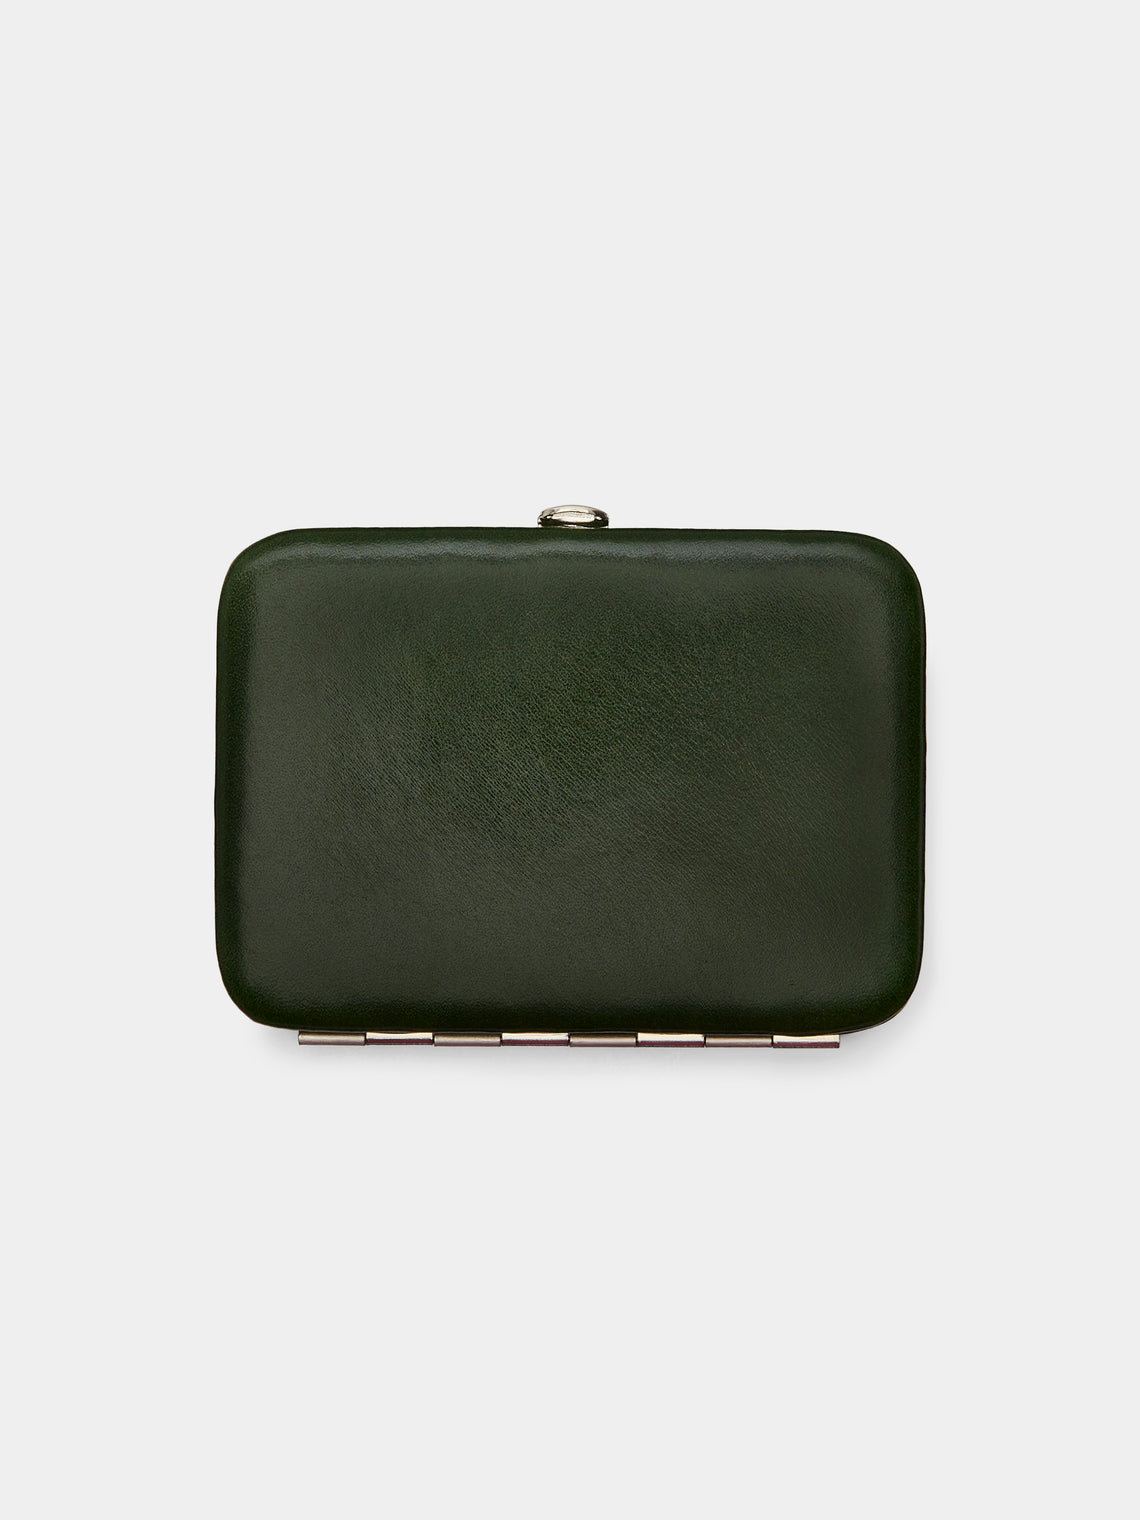 F. Hammann - Leather Cigarette Case - Green - ABASK - 